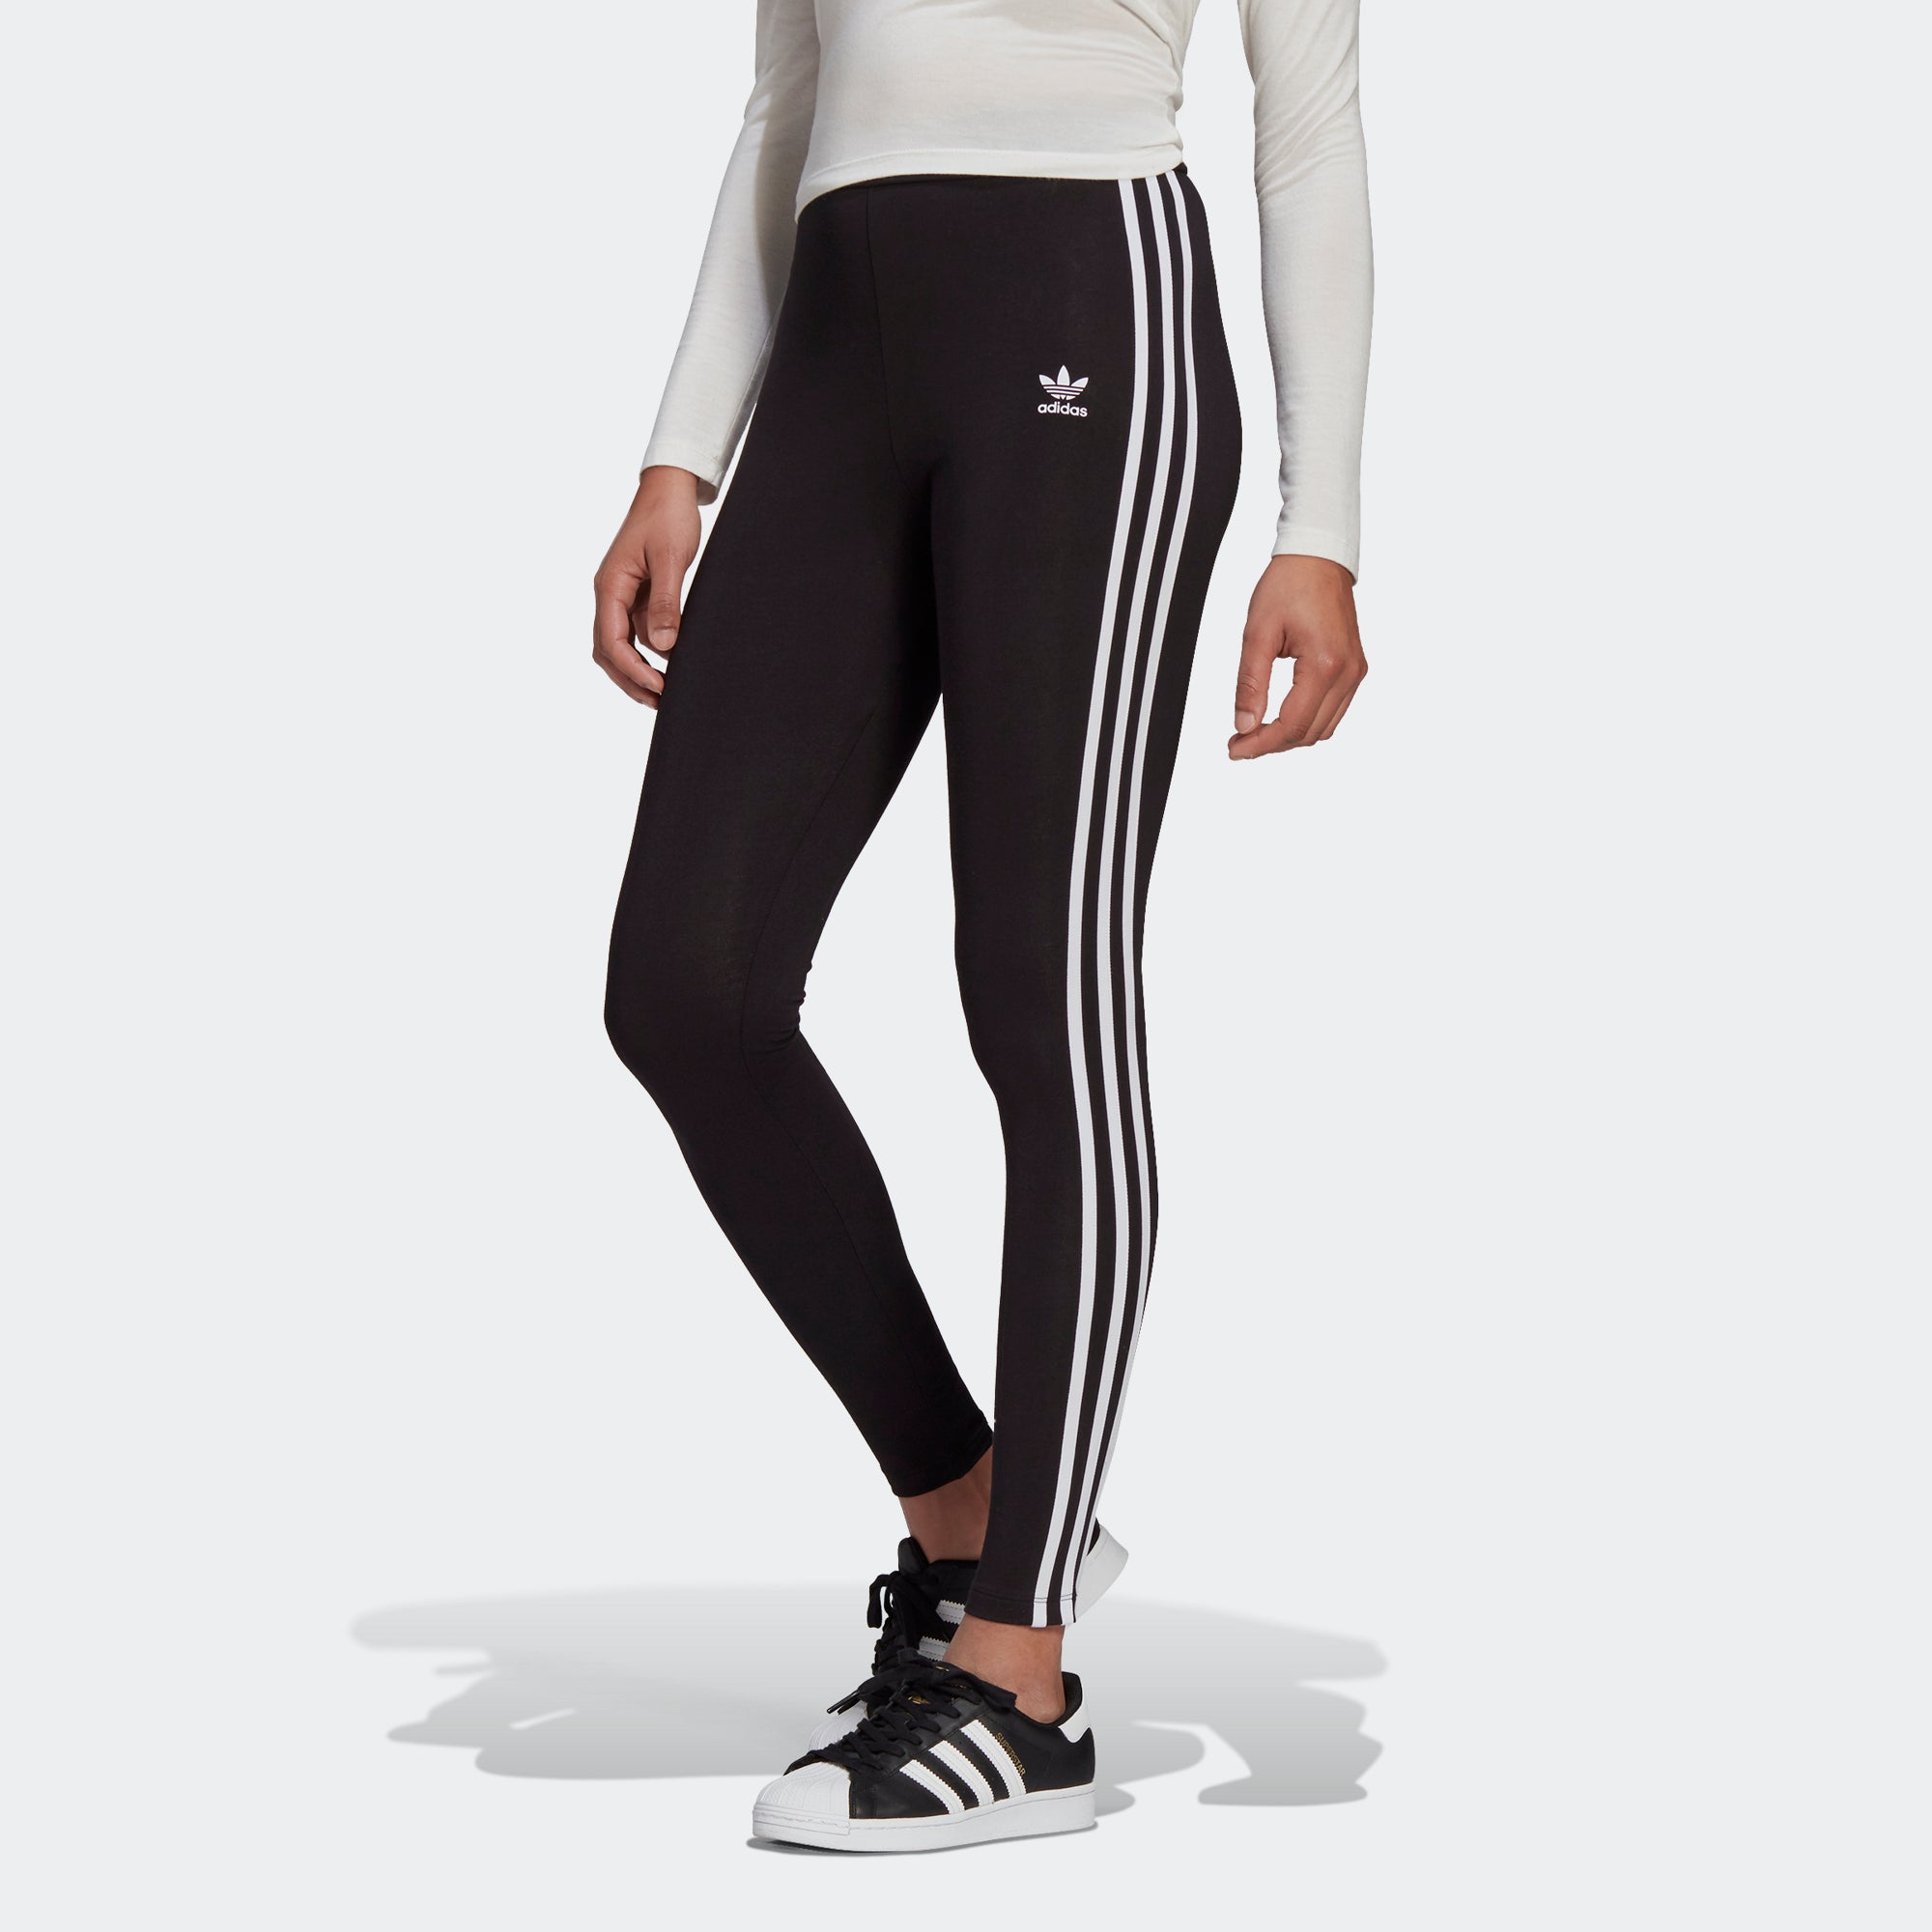 adidas Originals three stripe leggings in black and snake print | ASOS